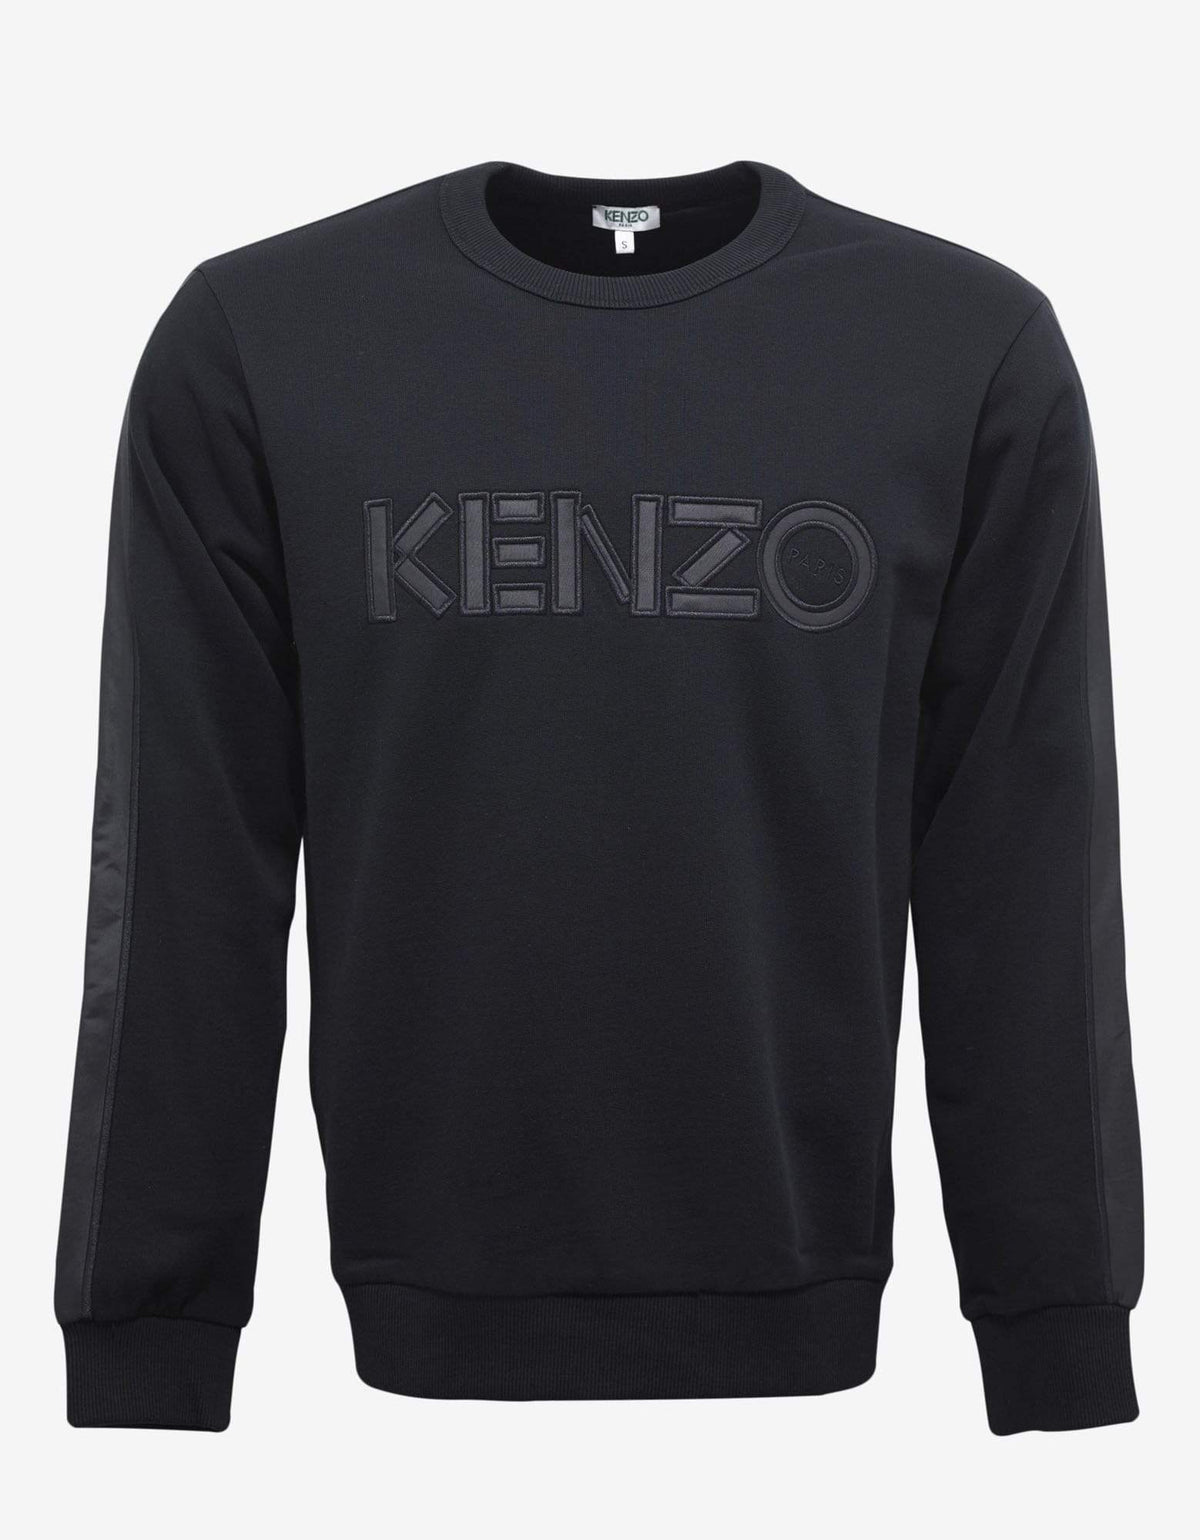 Kenzo Black Logo Sweatshirt with Nylon Inserts